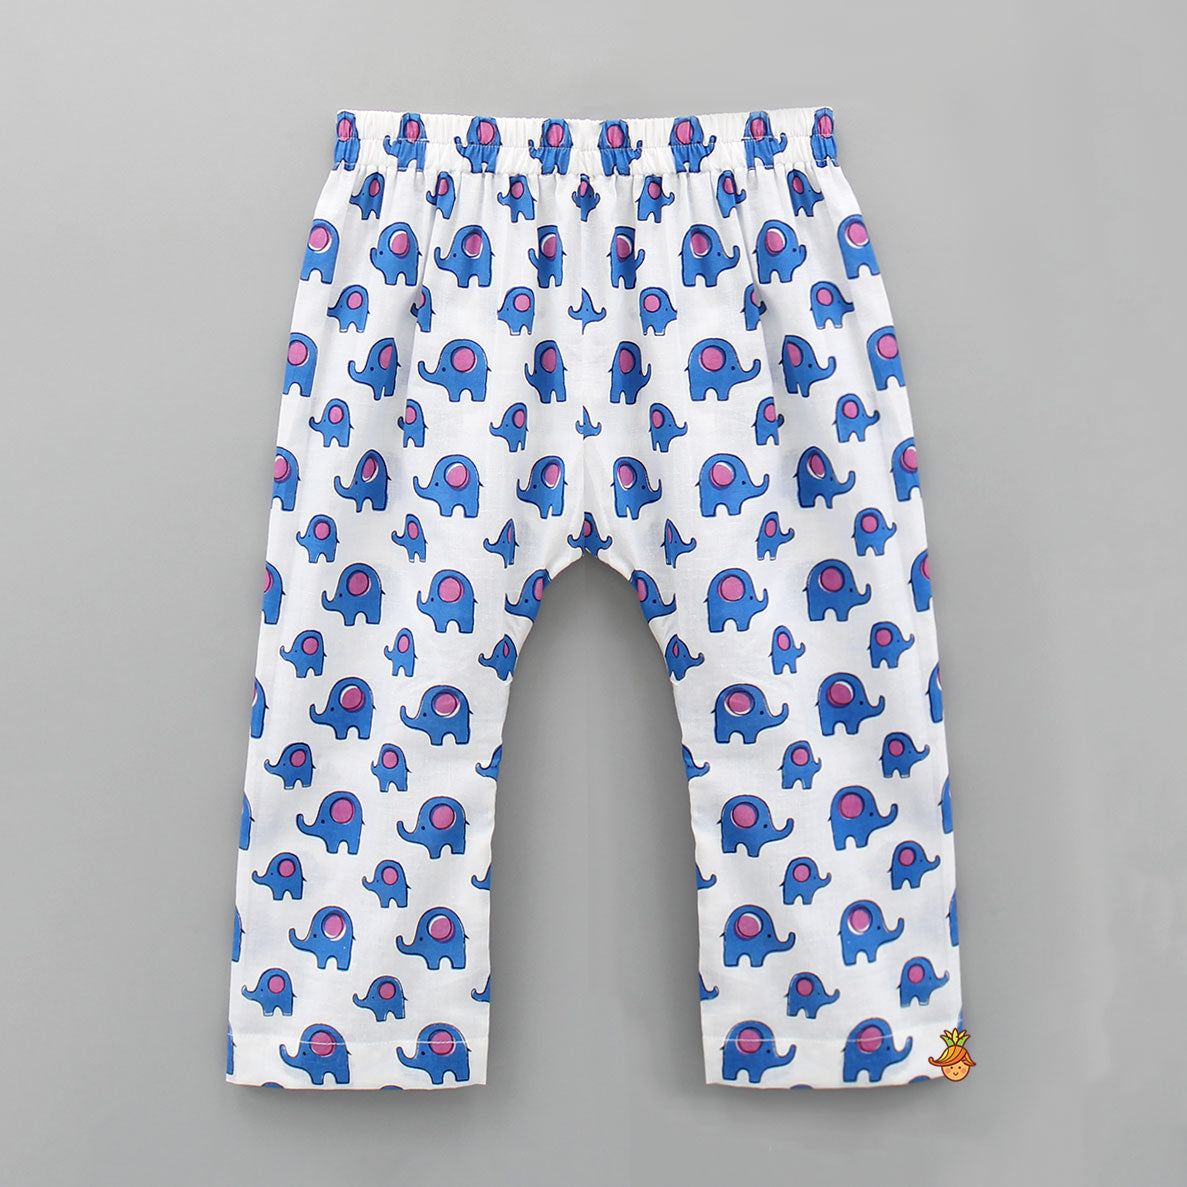 Elephant Printed Blue And White Sleepwear